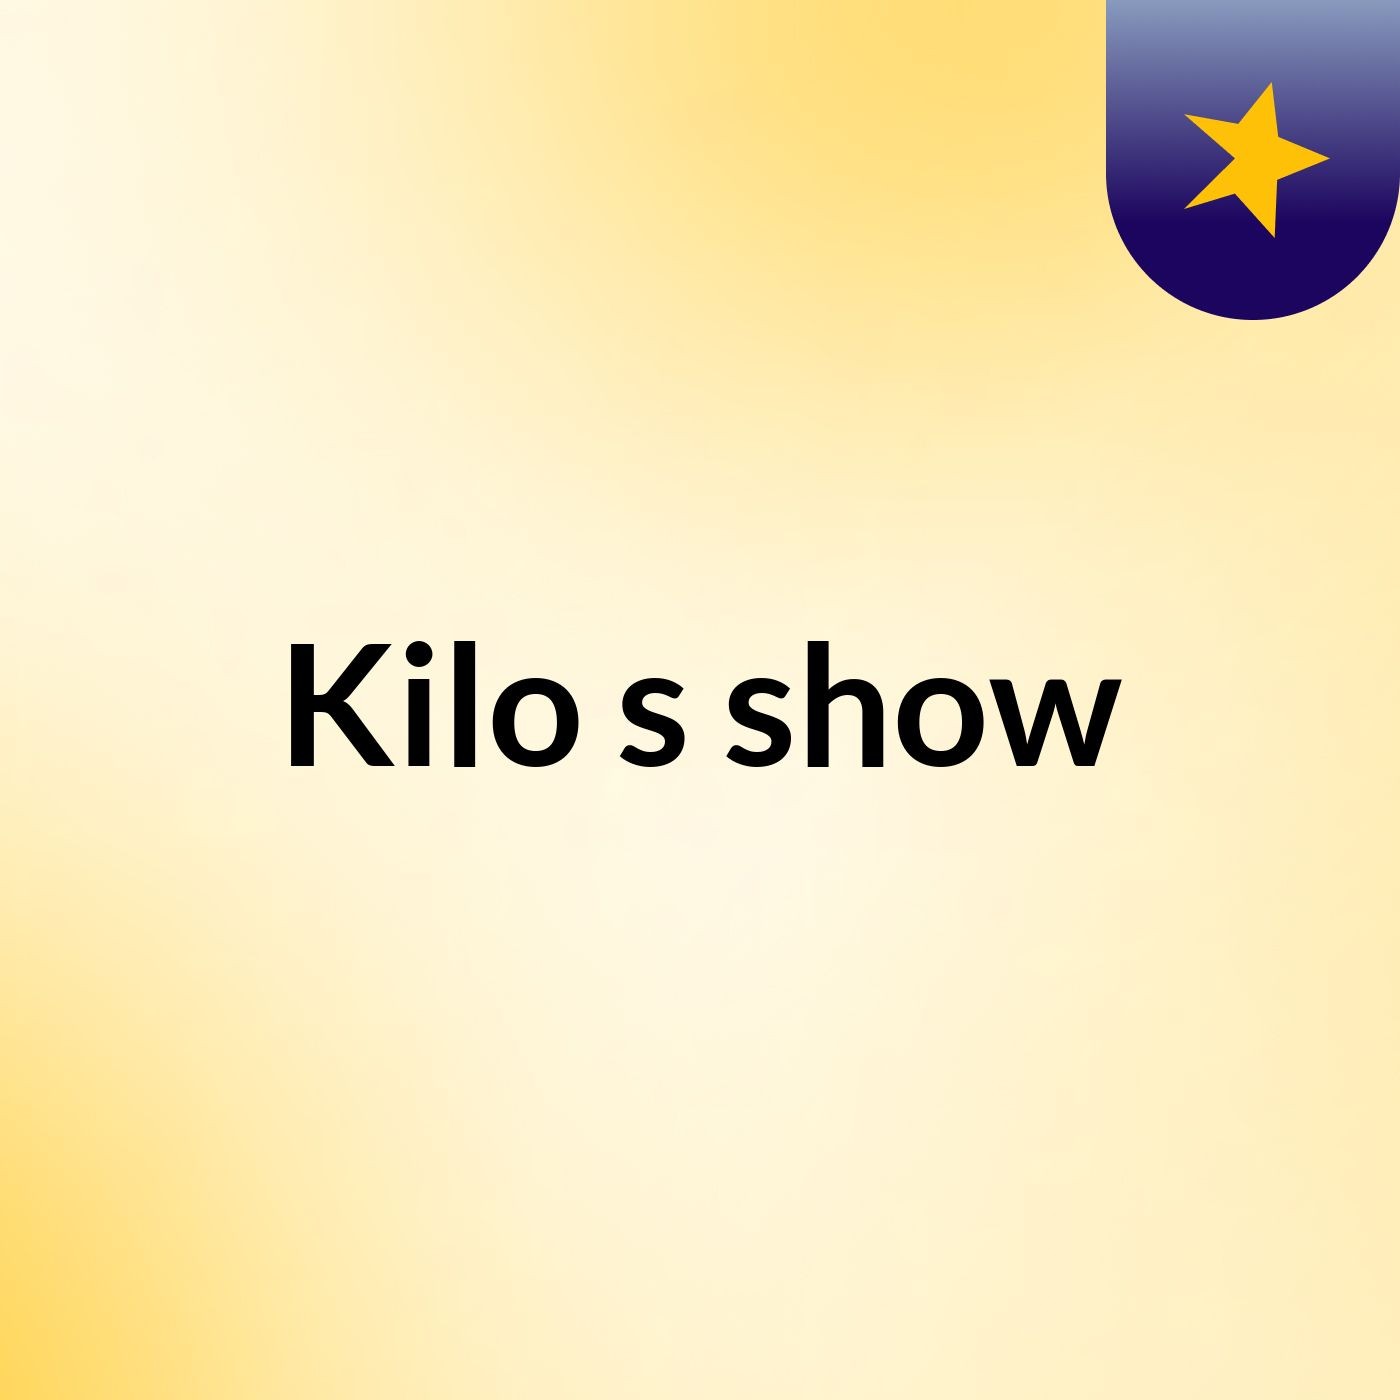 Kilo's show